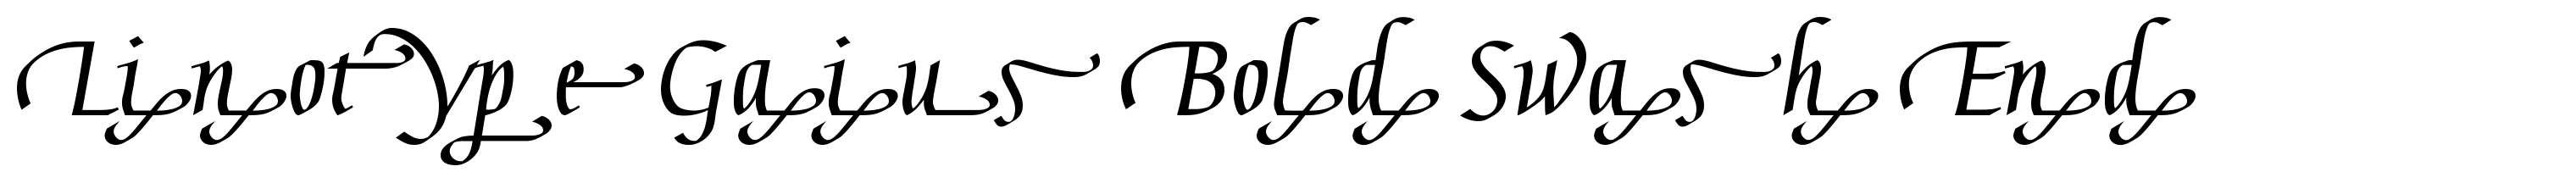 Linotype Gaius Bold Swash End